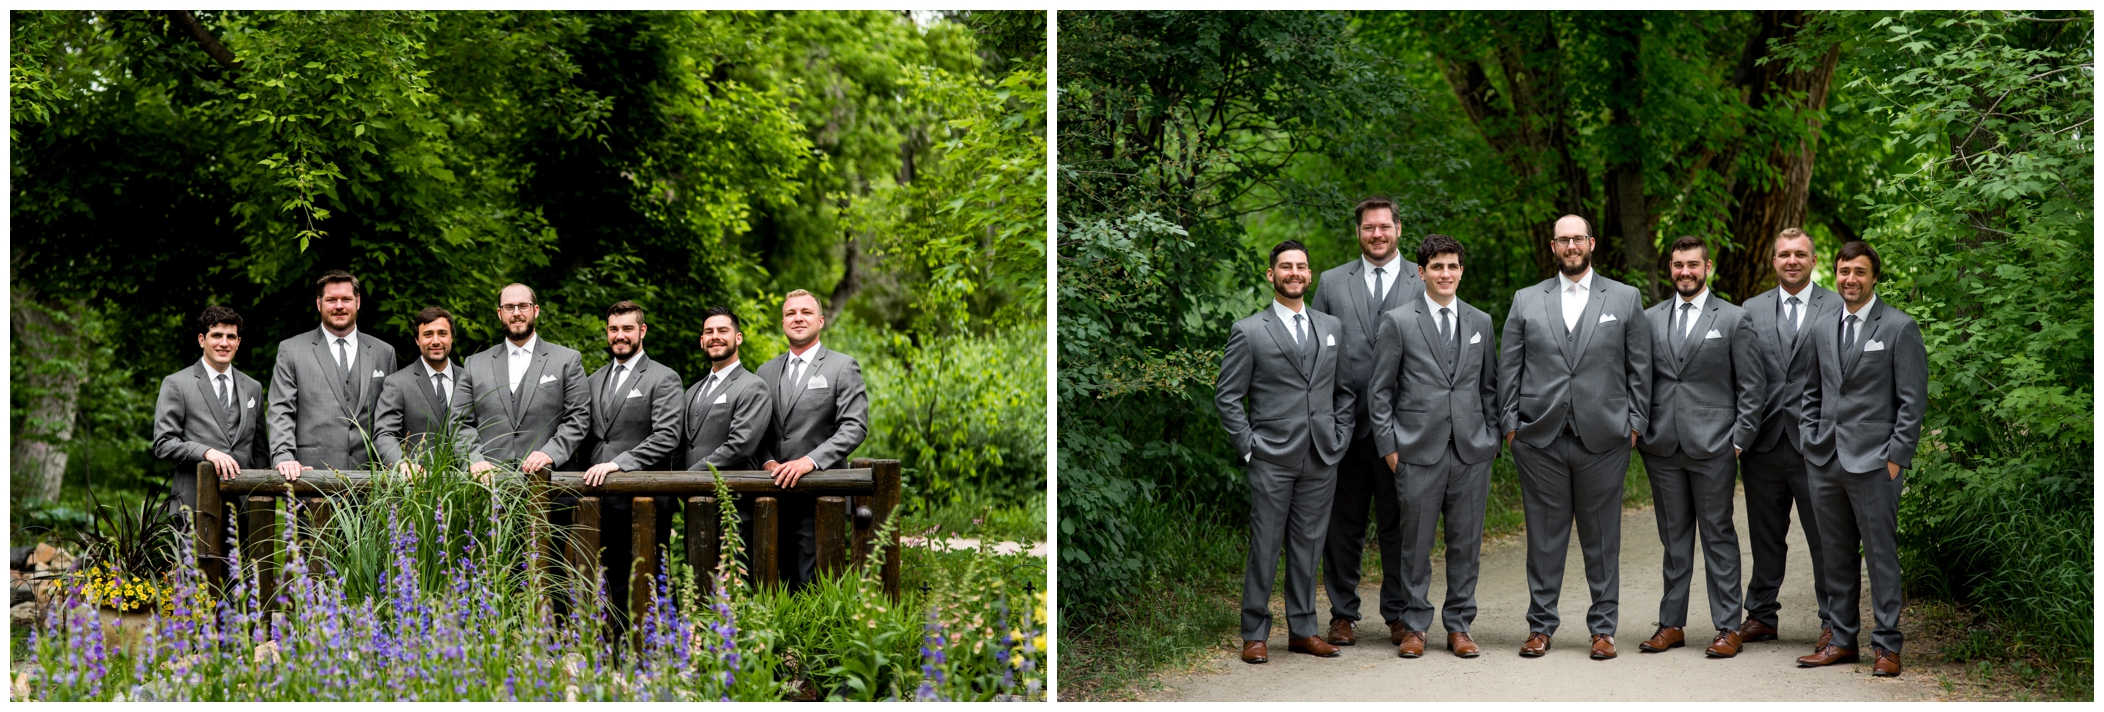 groomsmen in gray at Denver Colorado Chatfield wedding 